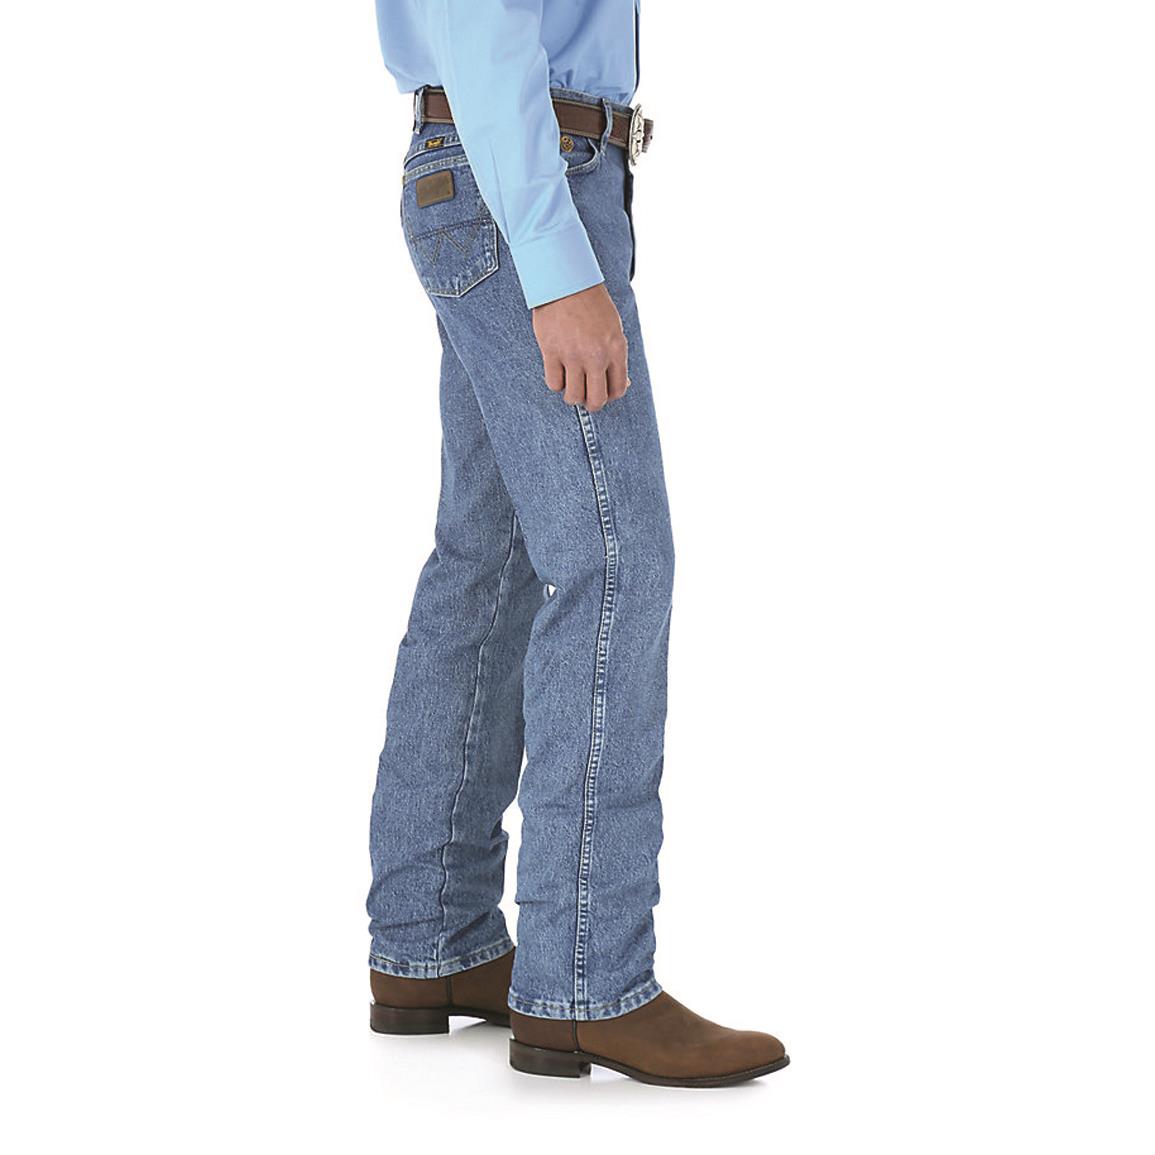 Wrangler® George Strait Cowboy Cut Original Fit Blue Jeans, Washed ...